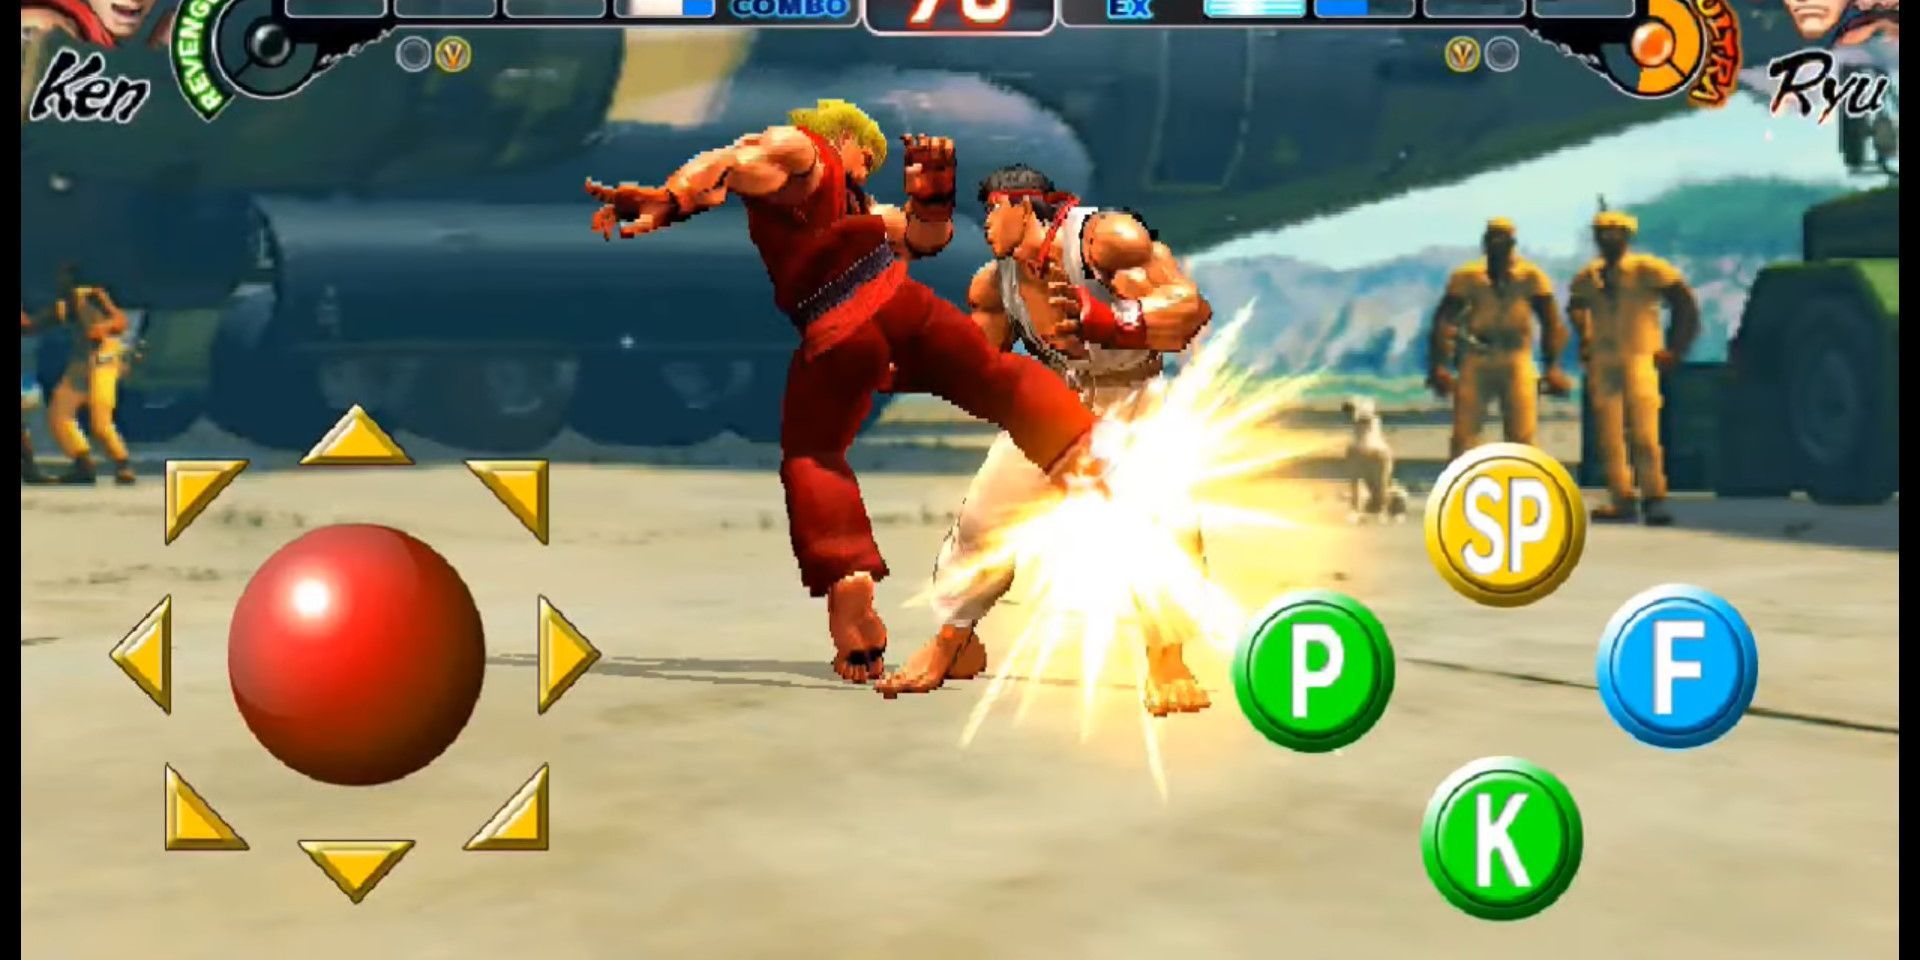 A screenshot from Street Fighter IV CE